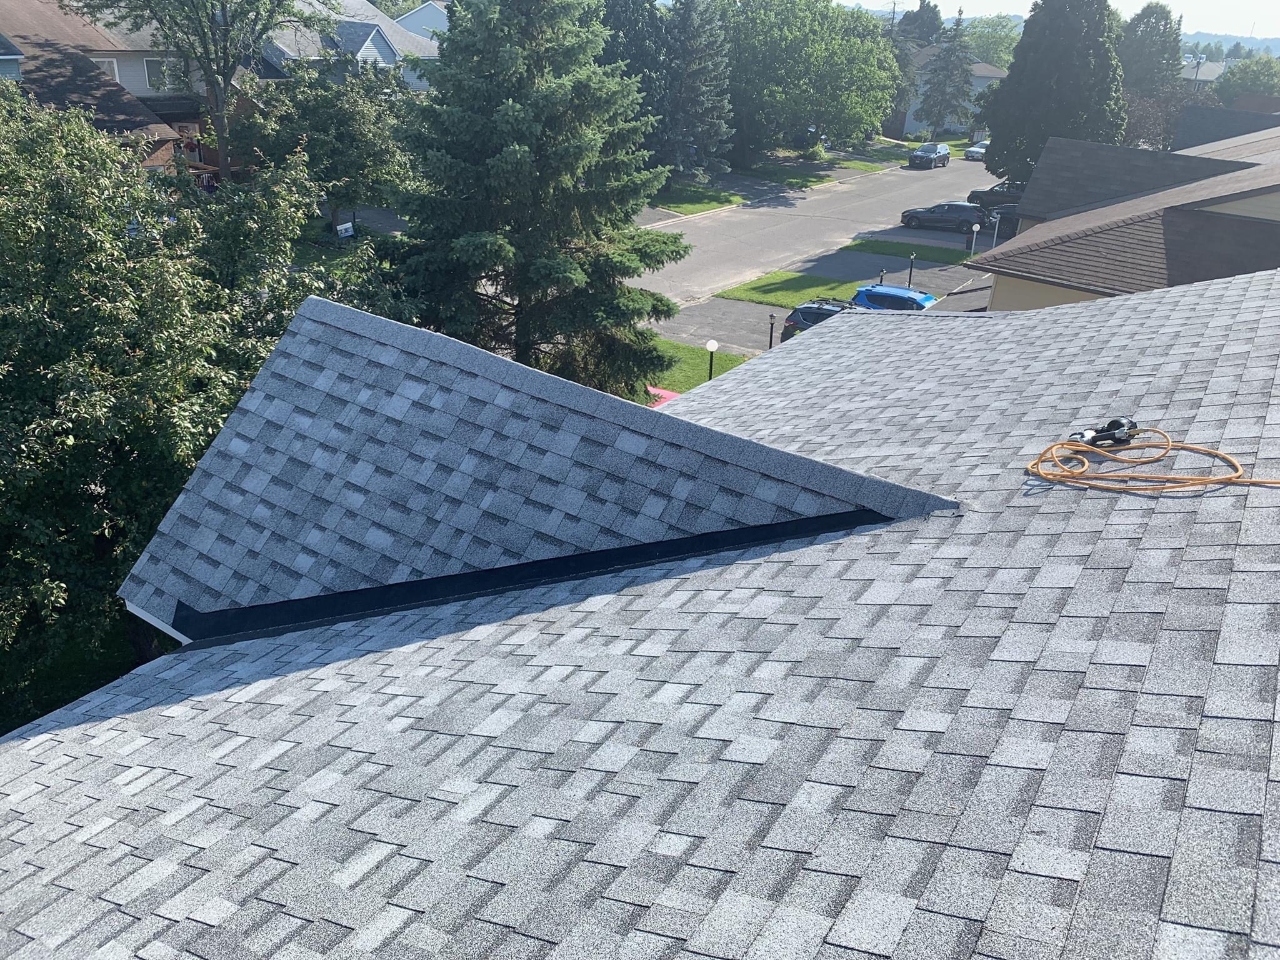 Newly installed asphalt roof.